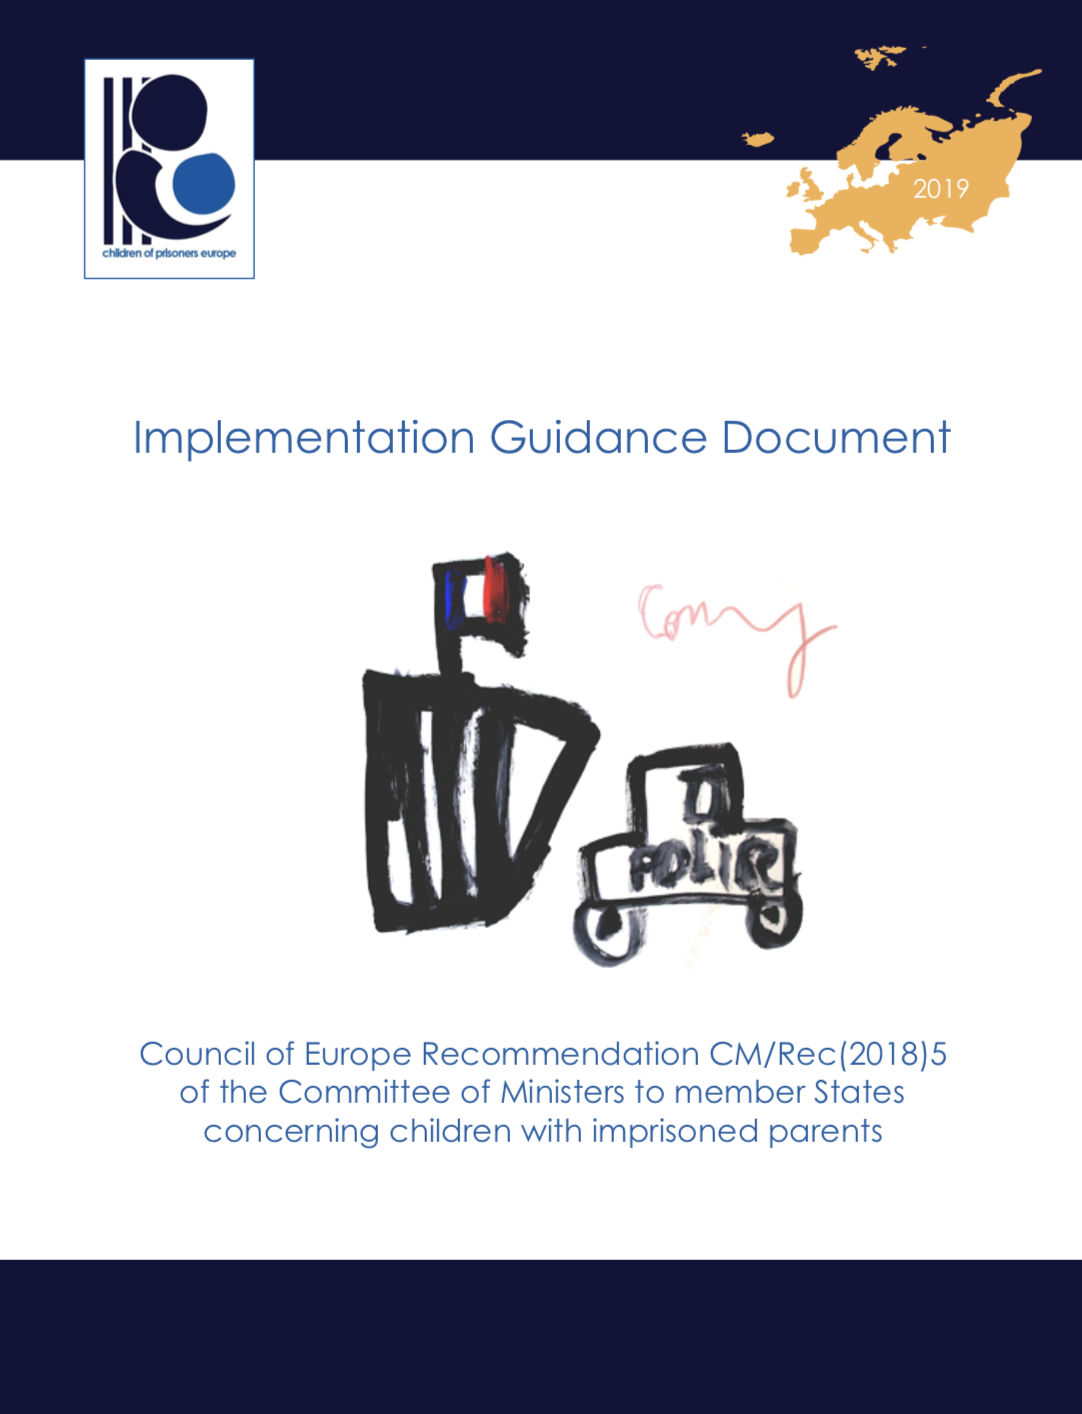 Implementation Guidance Document: Council of Europe Recommendation CM/Rec(2018)5